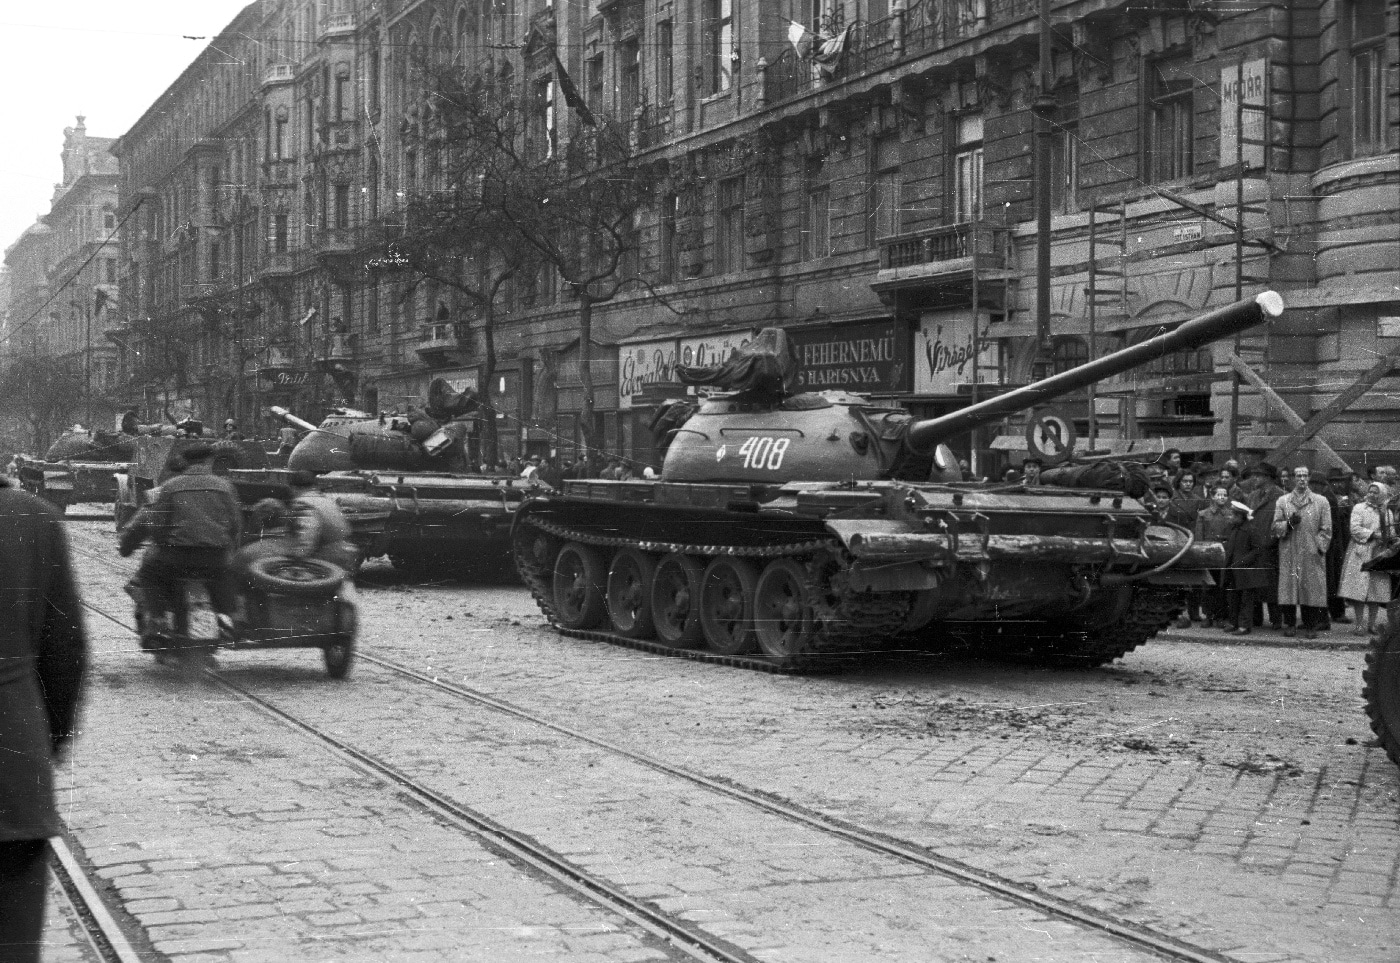 t-54 tanks in hungarian revolution